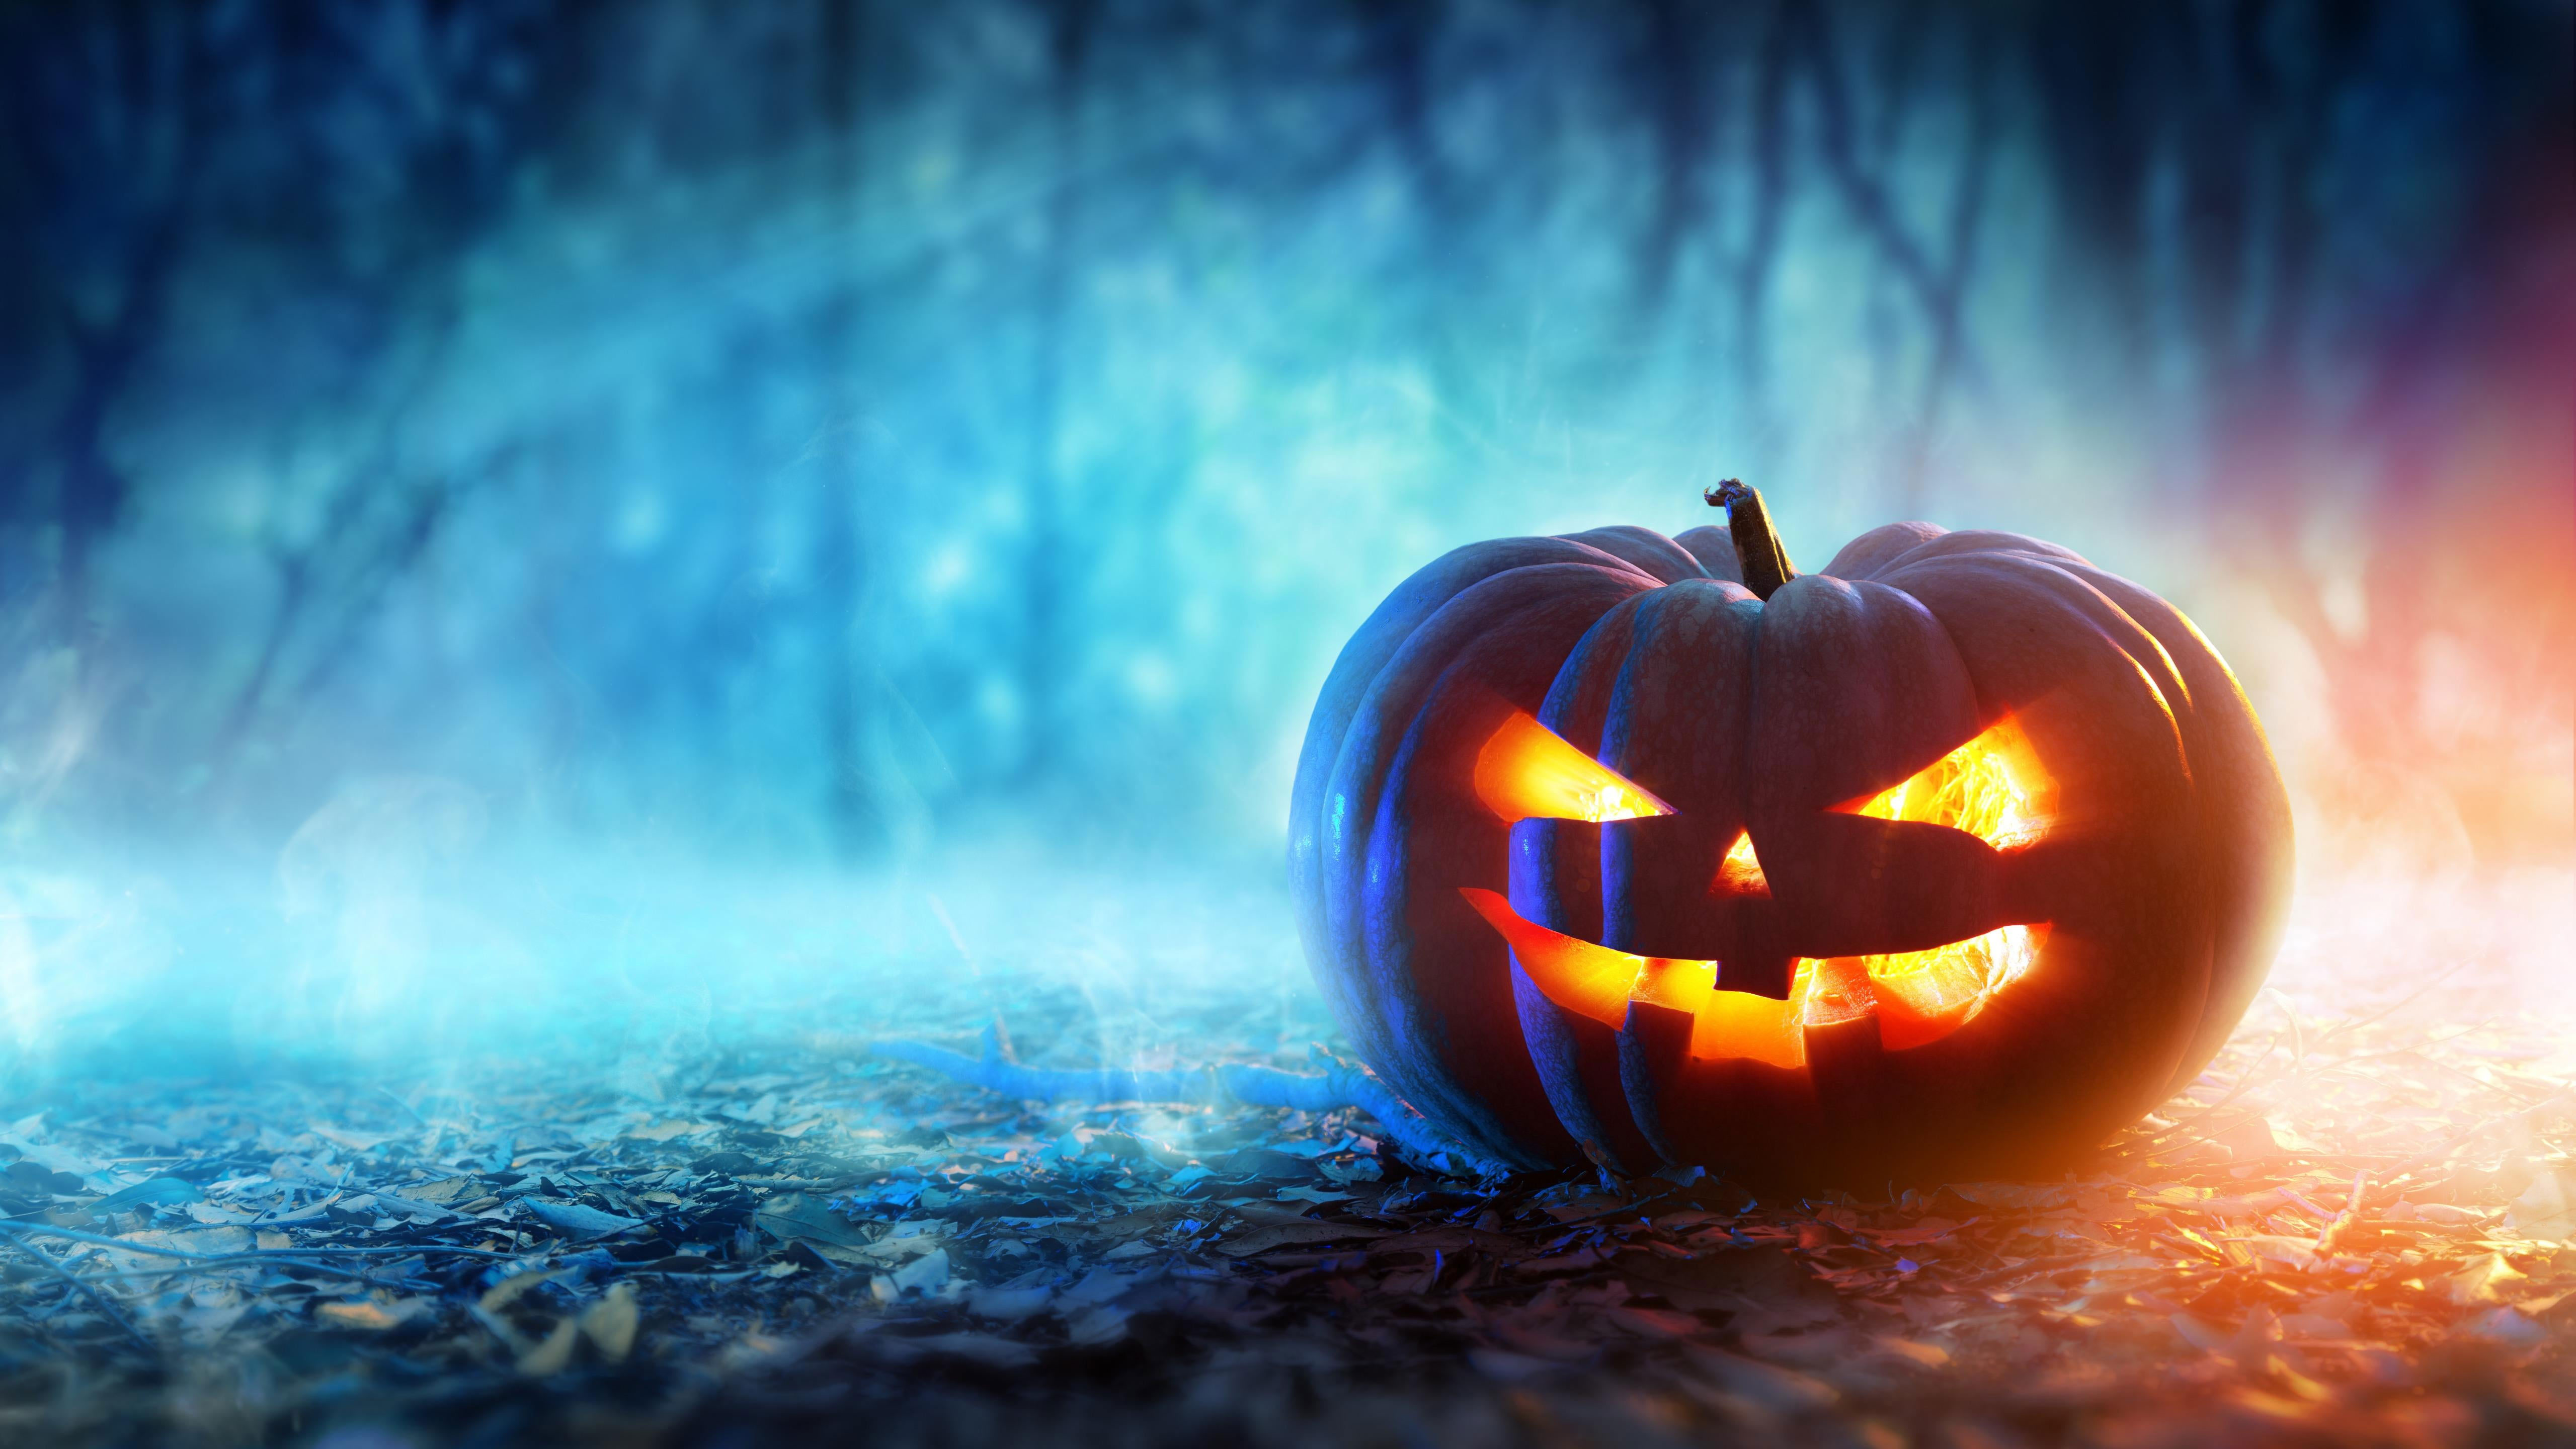 Wallpaper Halloween, Pumpkin, Jack O Lantern, Celebration, celebration, Holidays